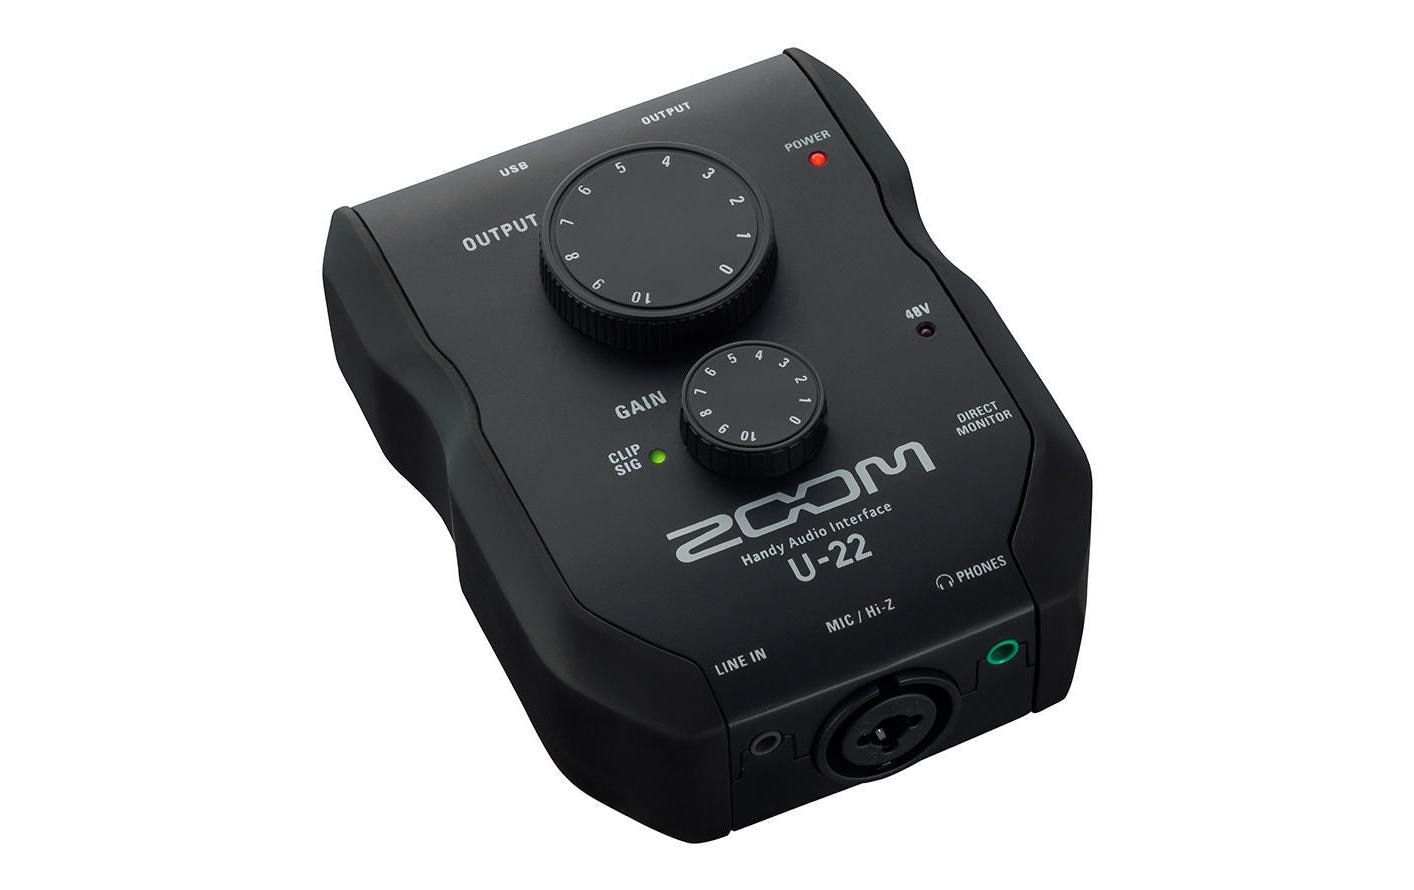 Zoom Audio Interface U-22